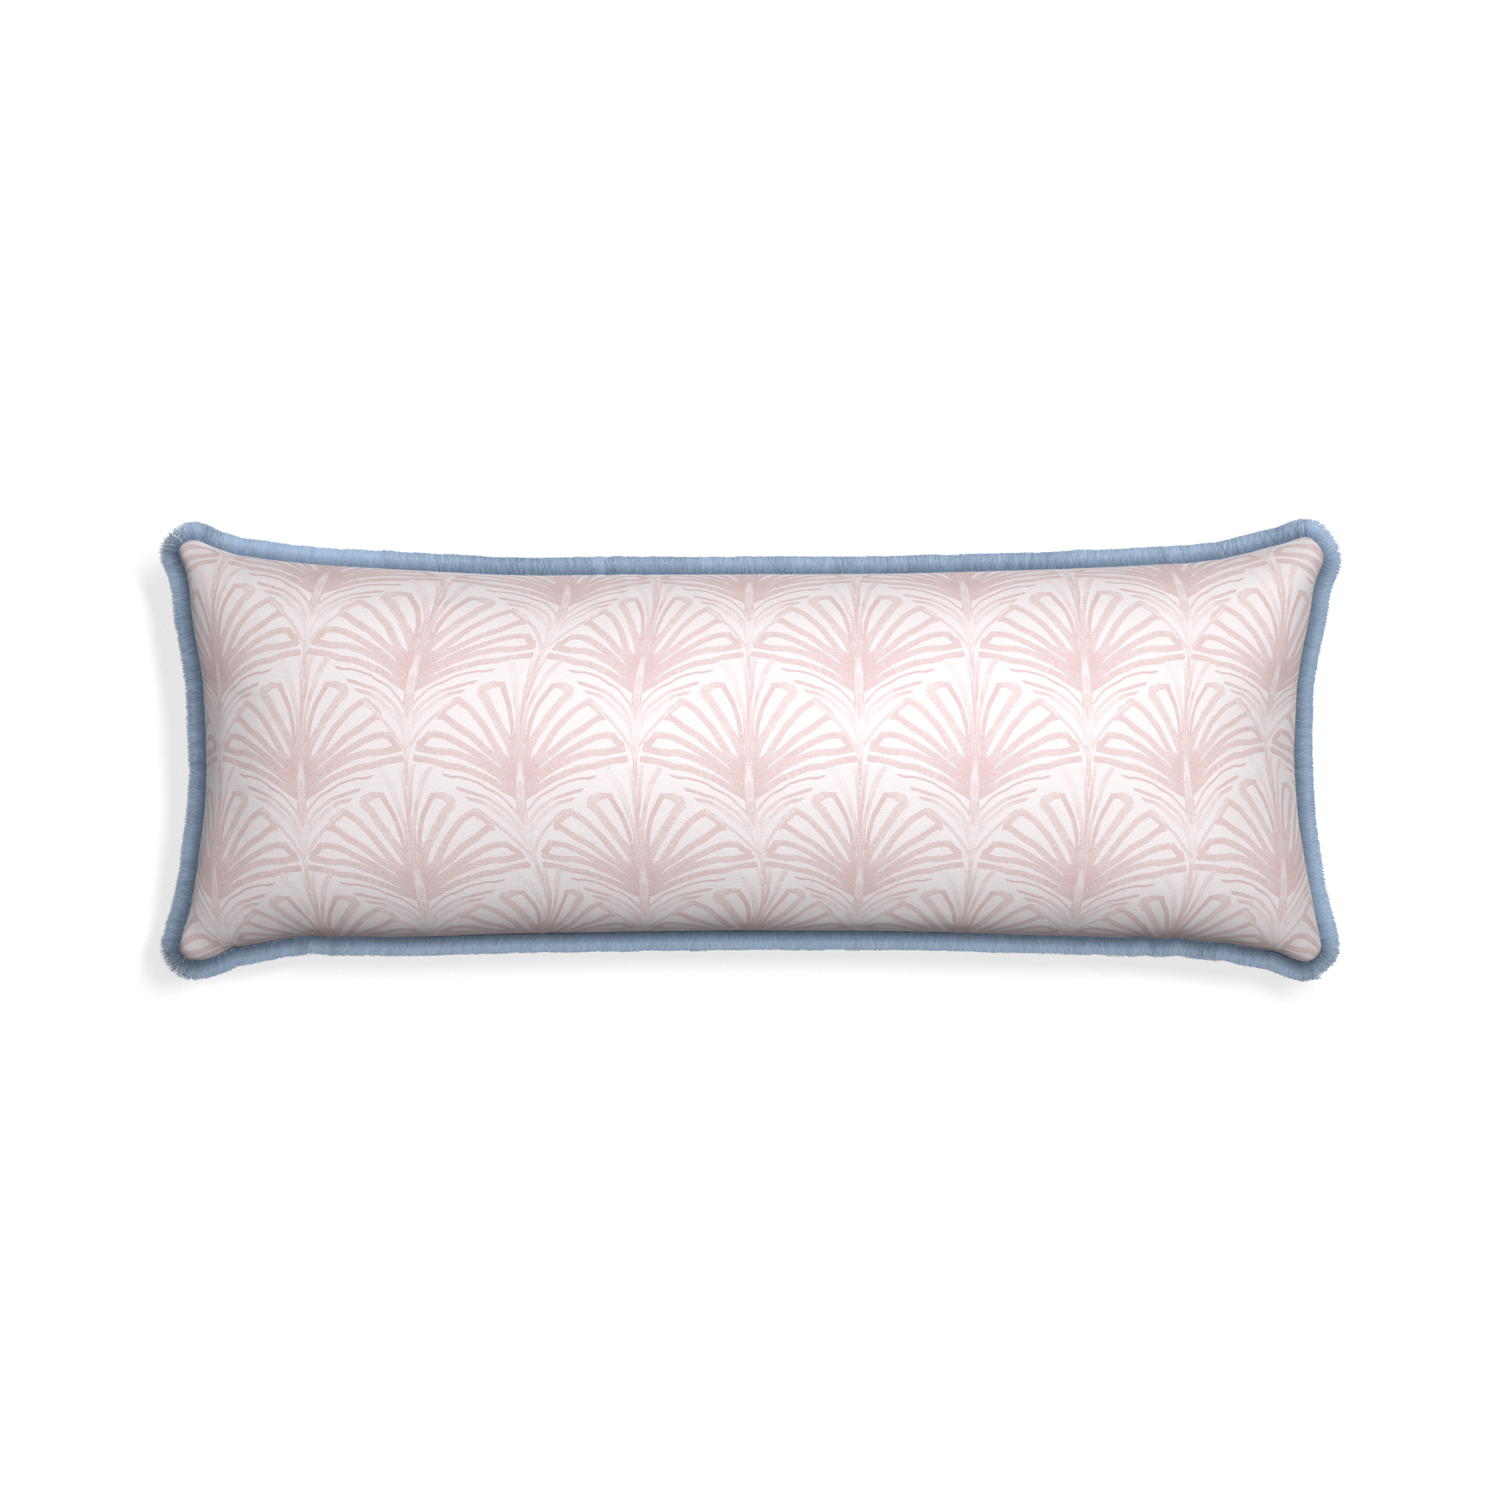 Xl-lumbar suzy rose custom pillow with sky fringe on white background